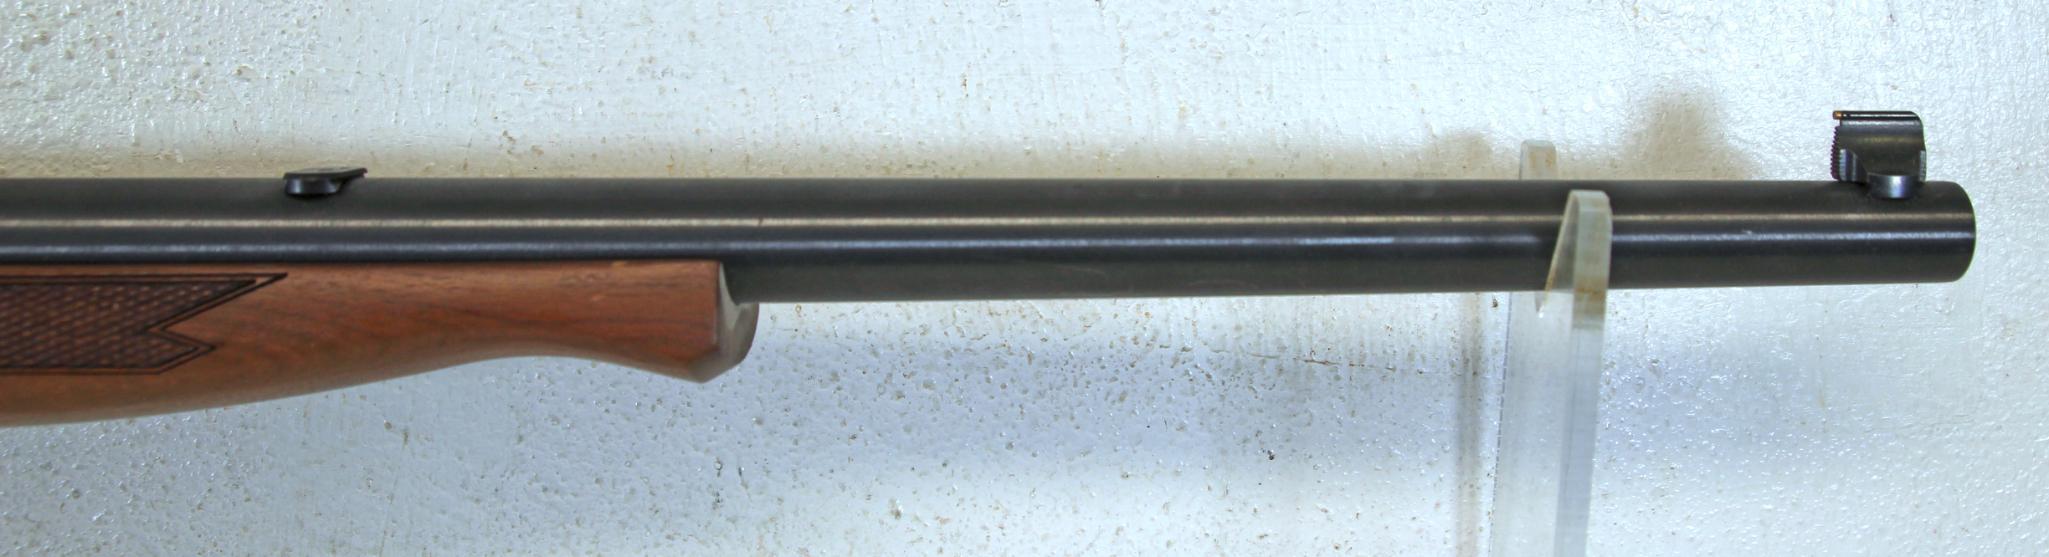 H&R Classic Carbine .45 Colt Single Shot Rifle 20" Barrel... SN#HX 323698...